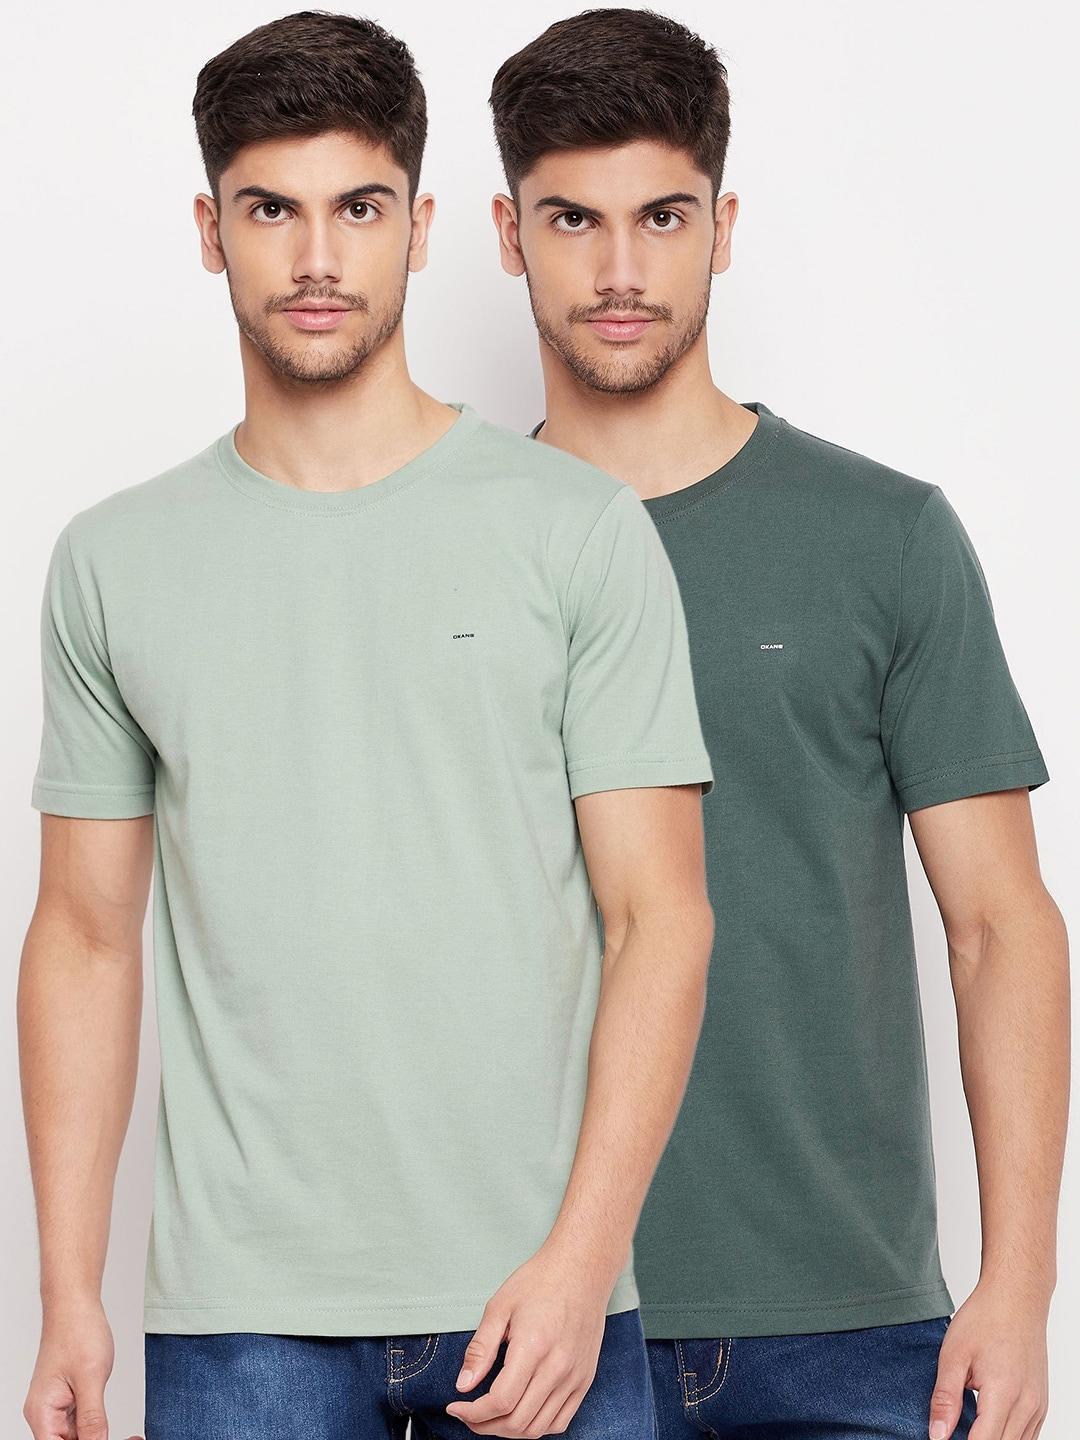 okane-men-olive-green-2-v-neck-pockets-t-shirt